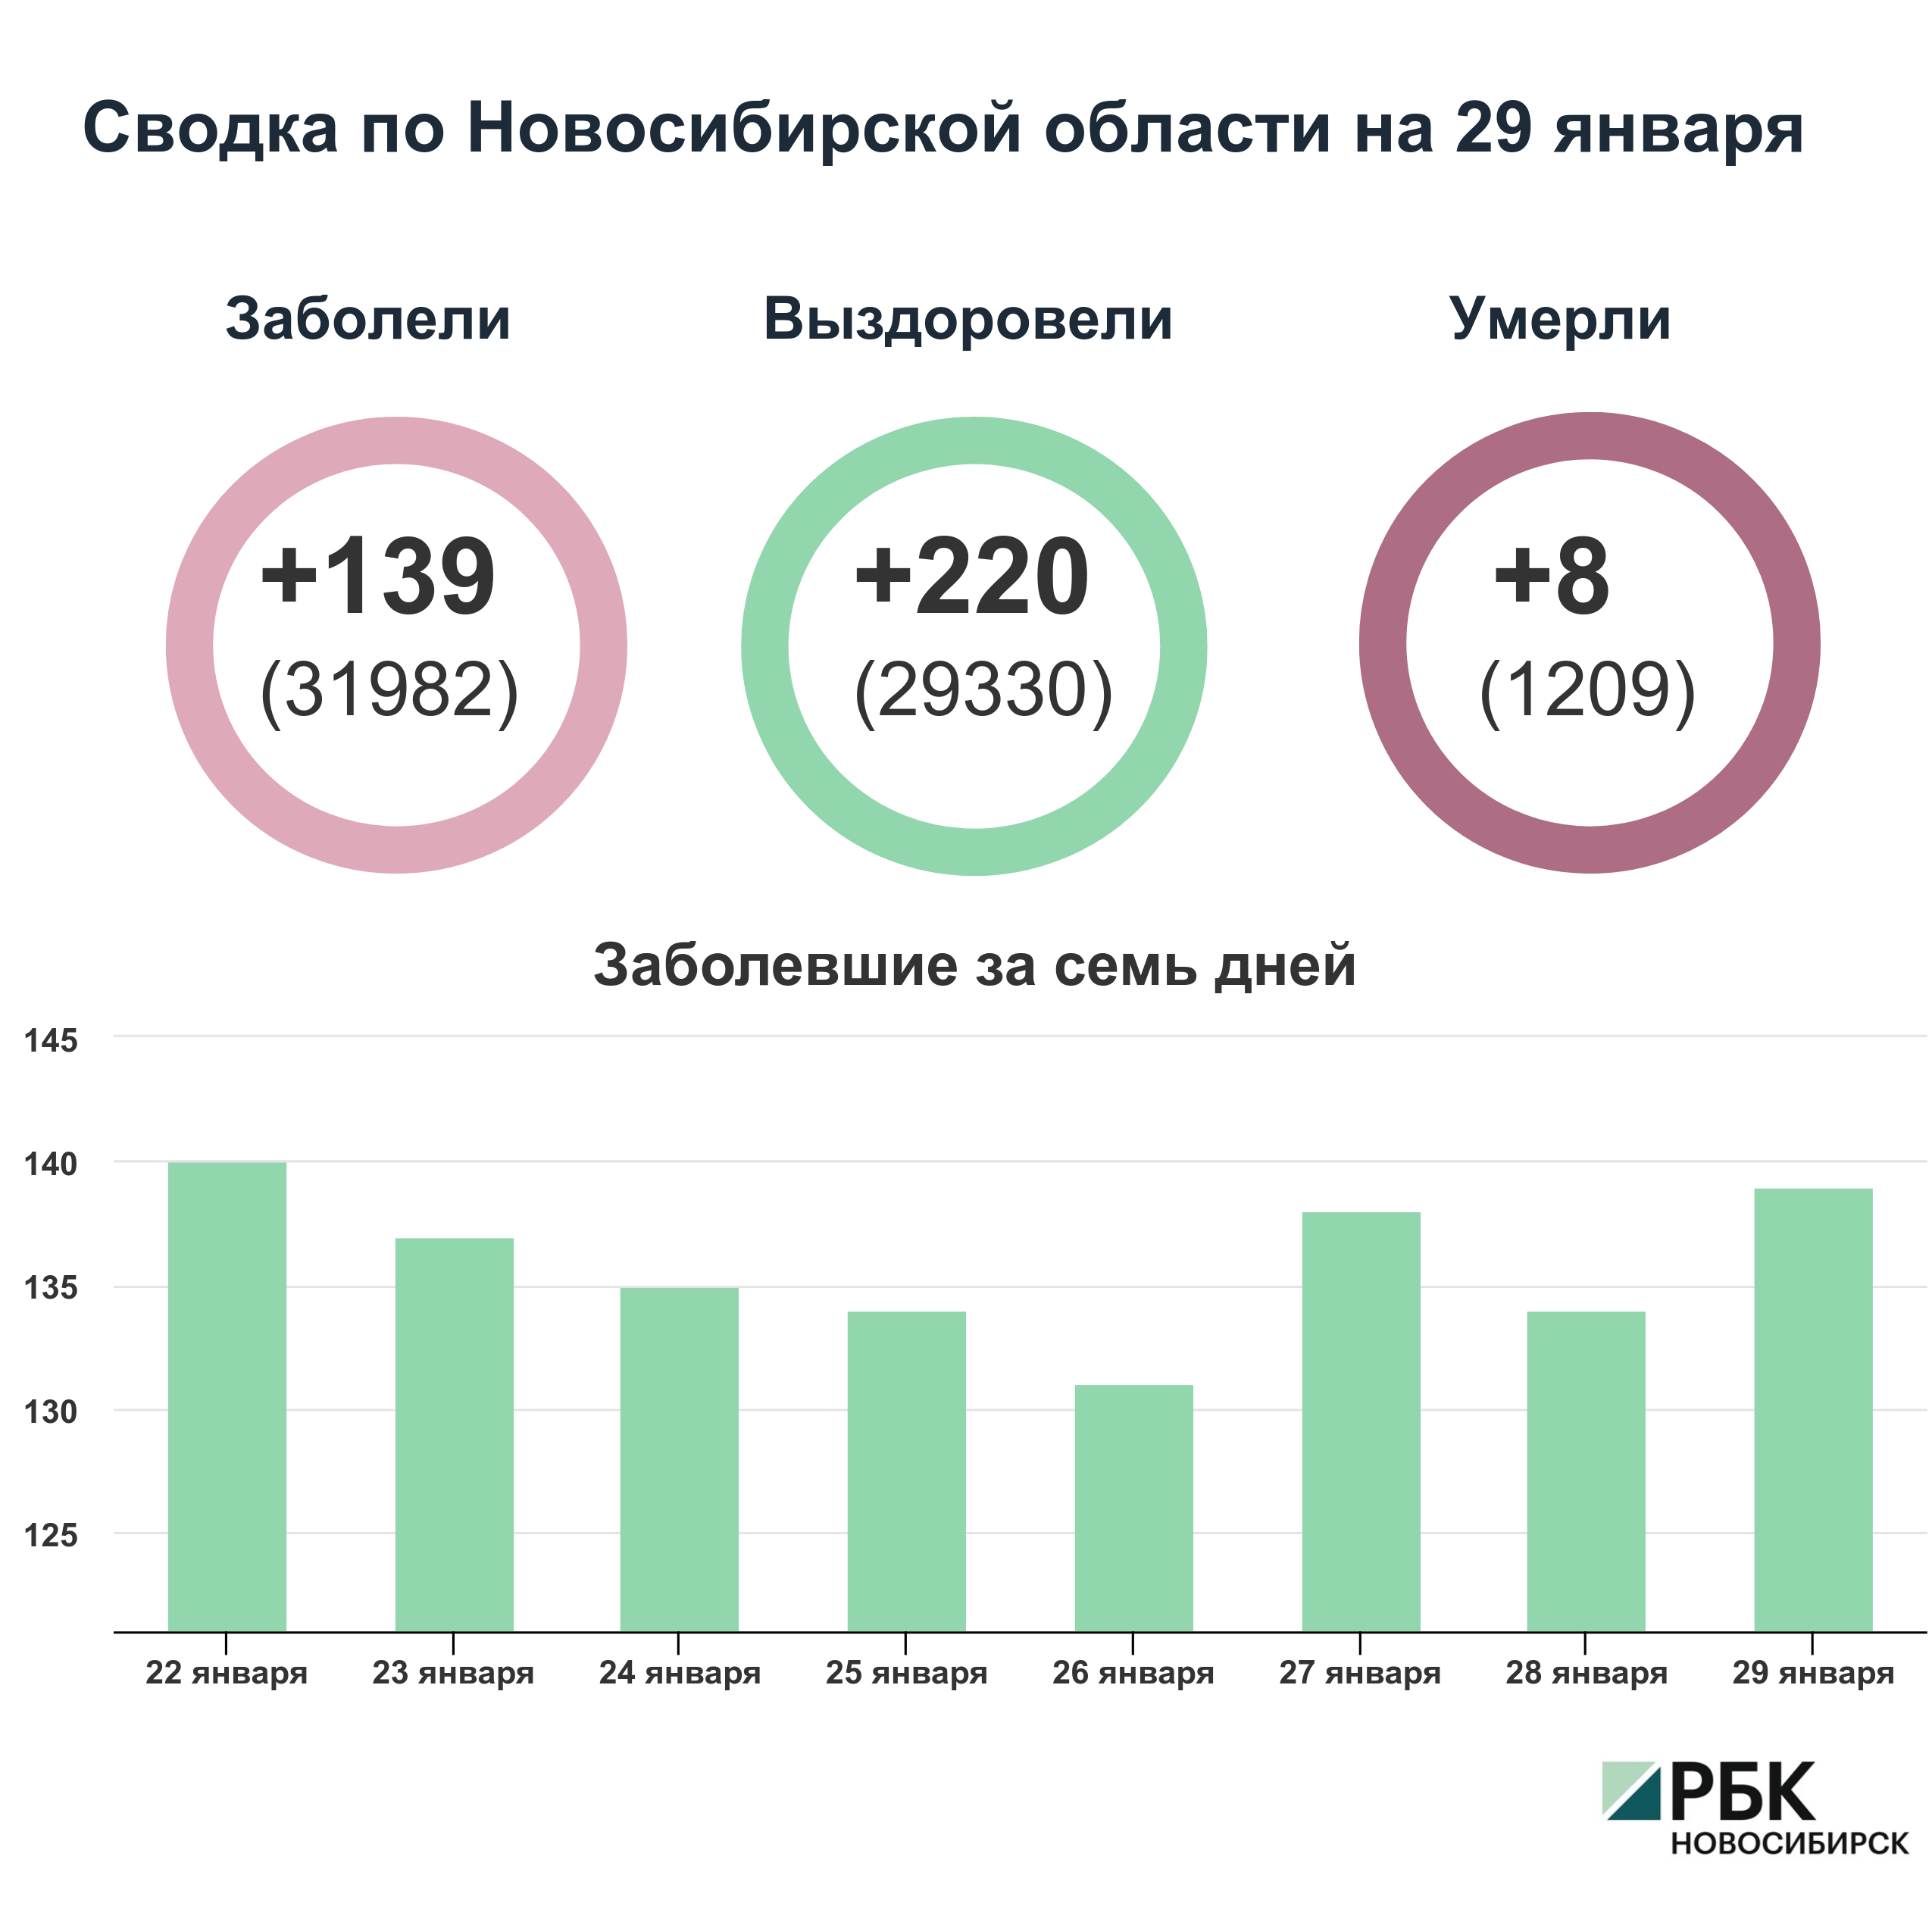 Коронавирус в Новосибирске: сводка на 29 января